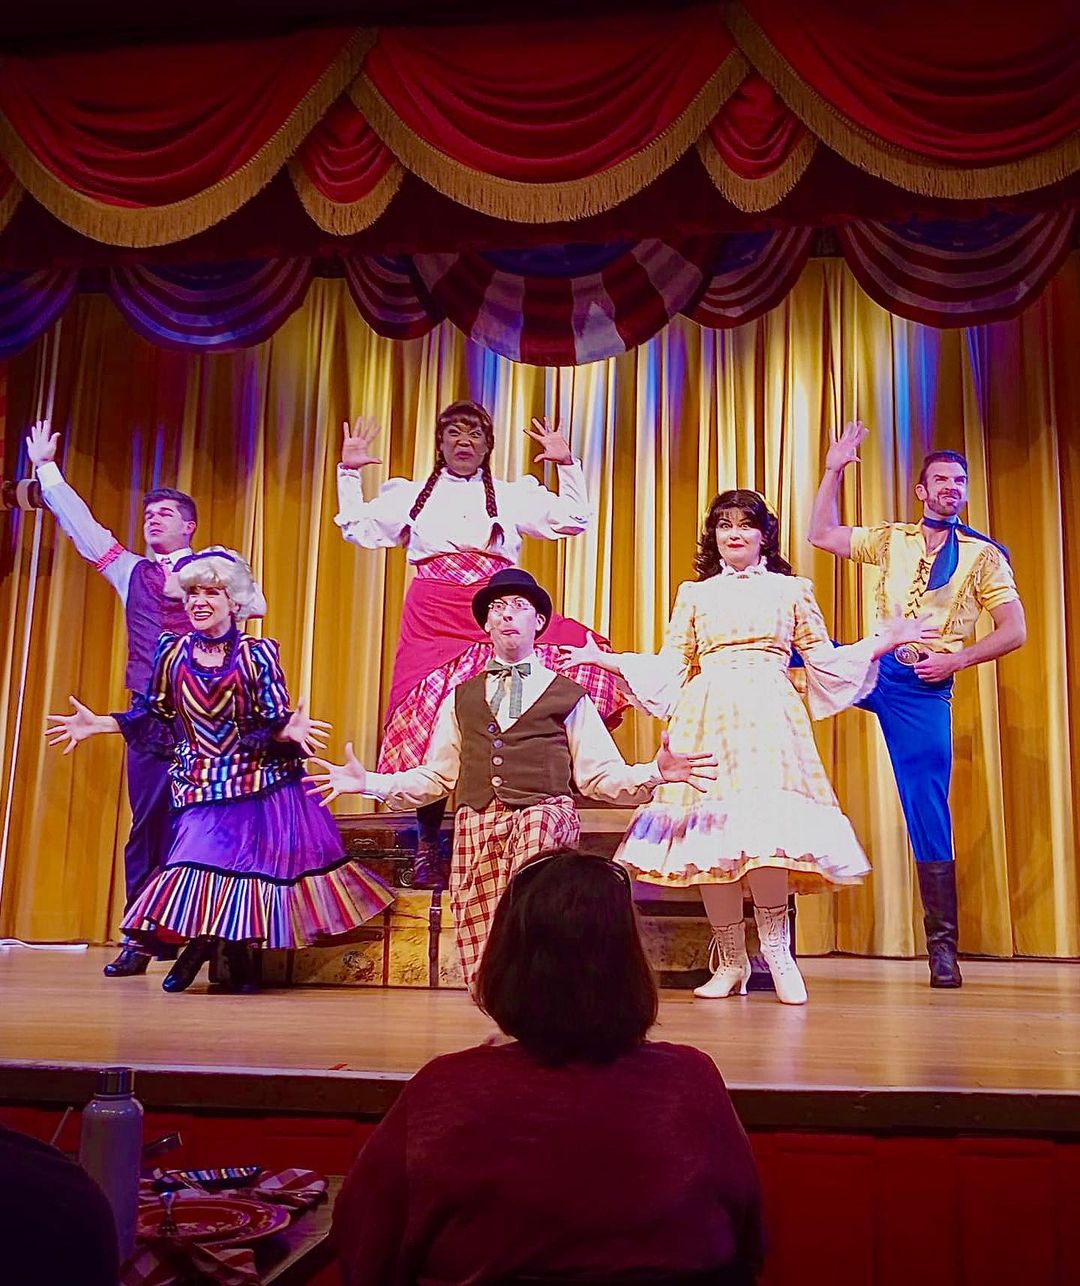 Hoop-Dee-Doo Musical Revue - Essen und Show bei Disney (Fort Wilderness) (7)